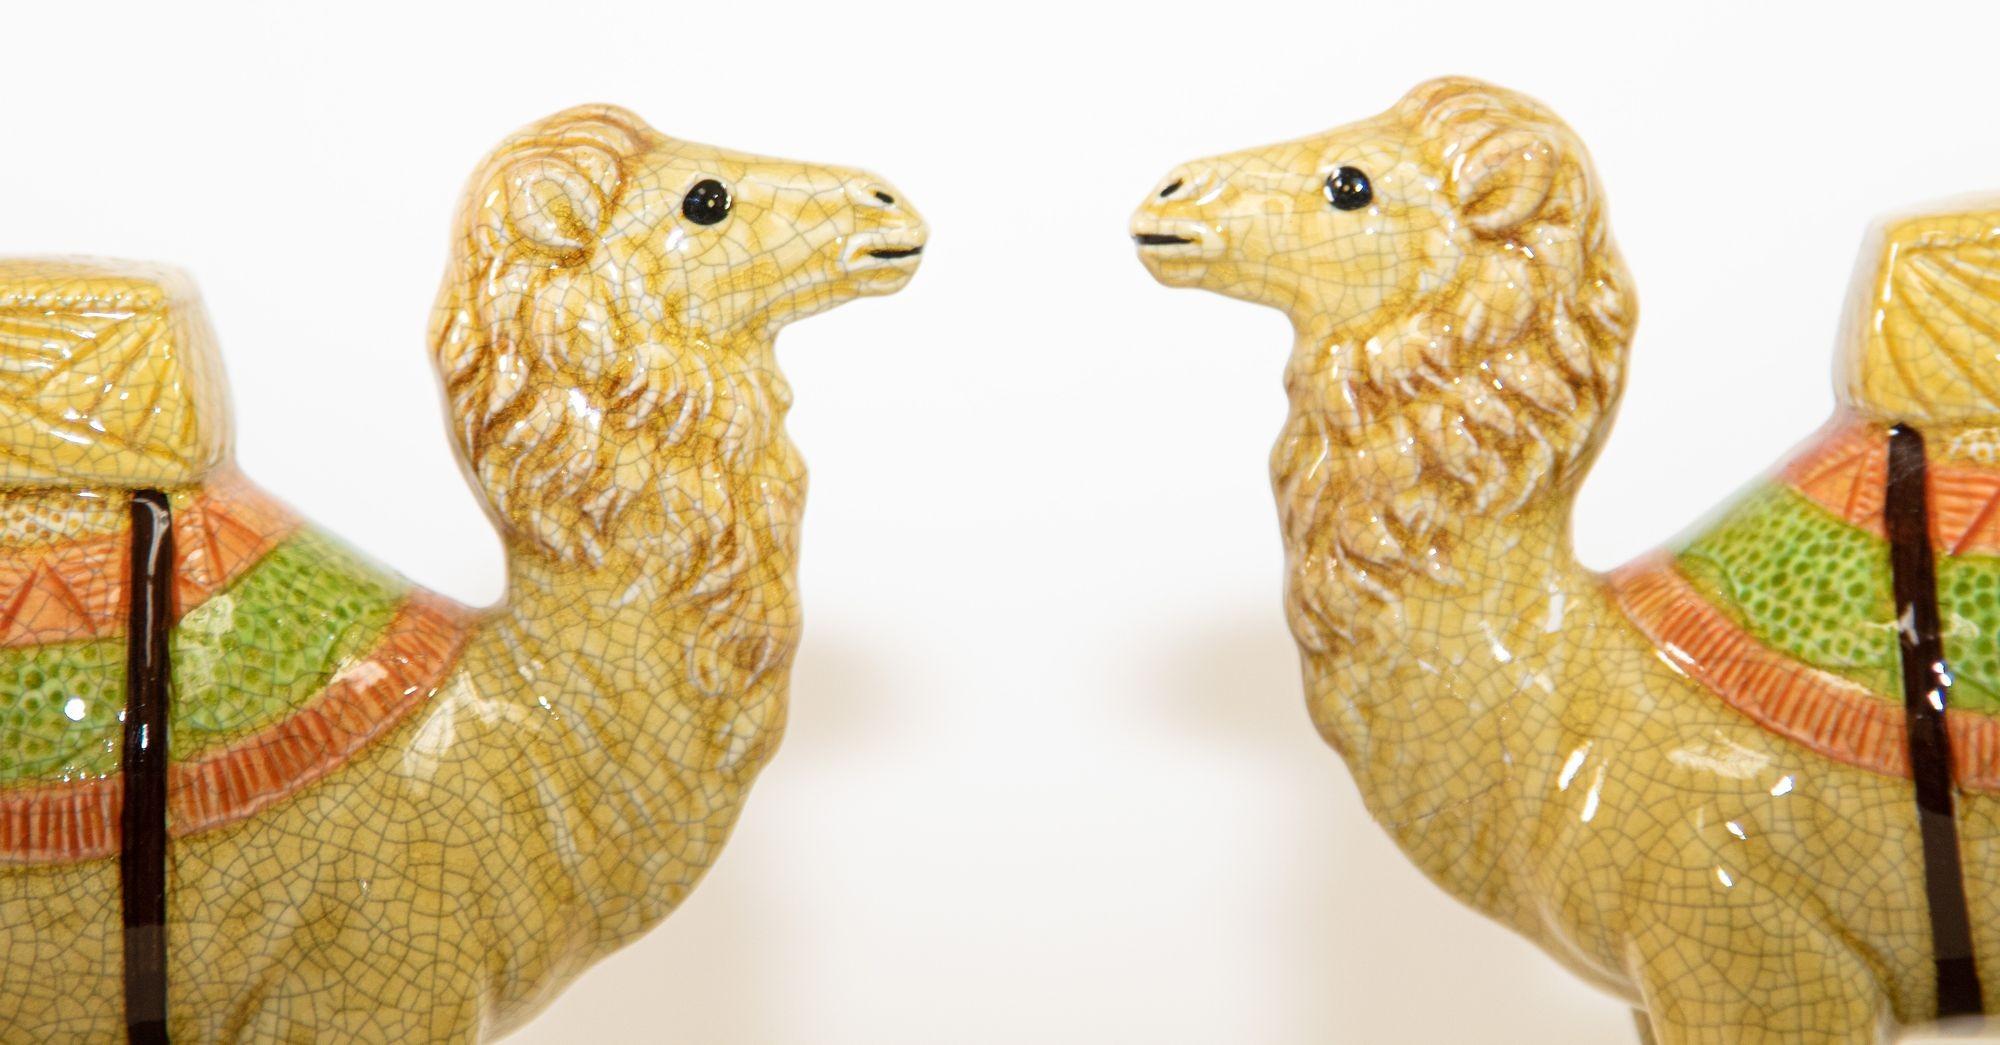 20th Century Vintage Porcelain Camel Sculptures Figurines Bookends For Sale